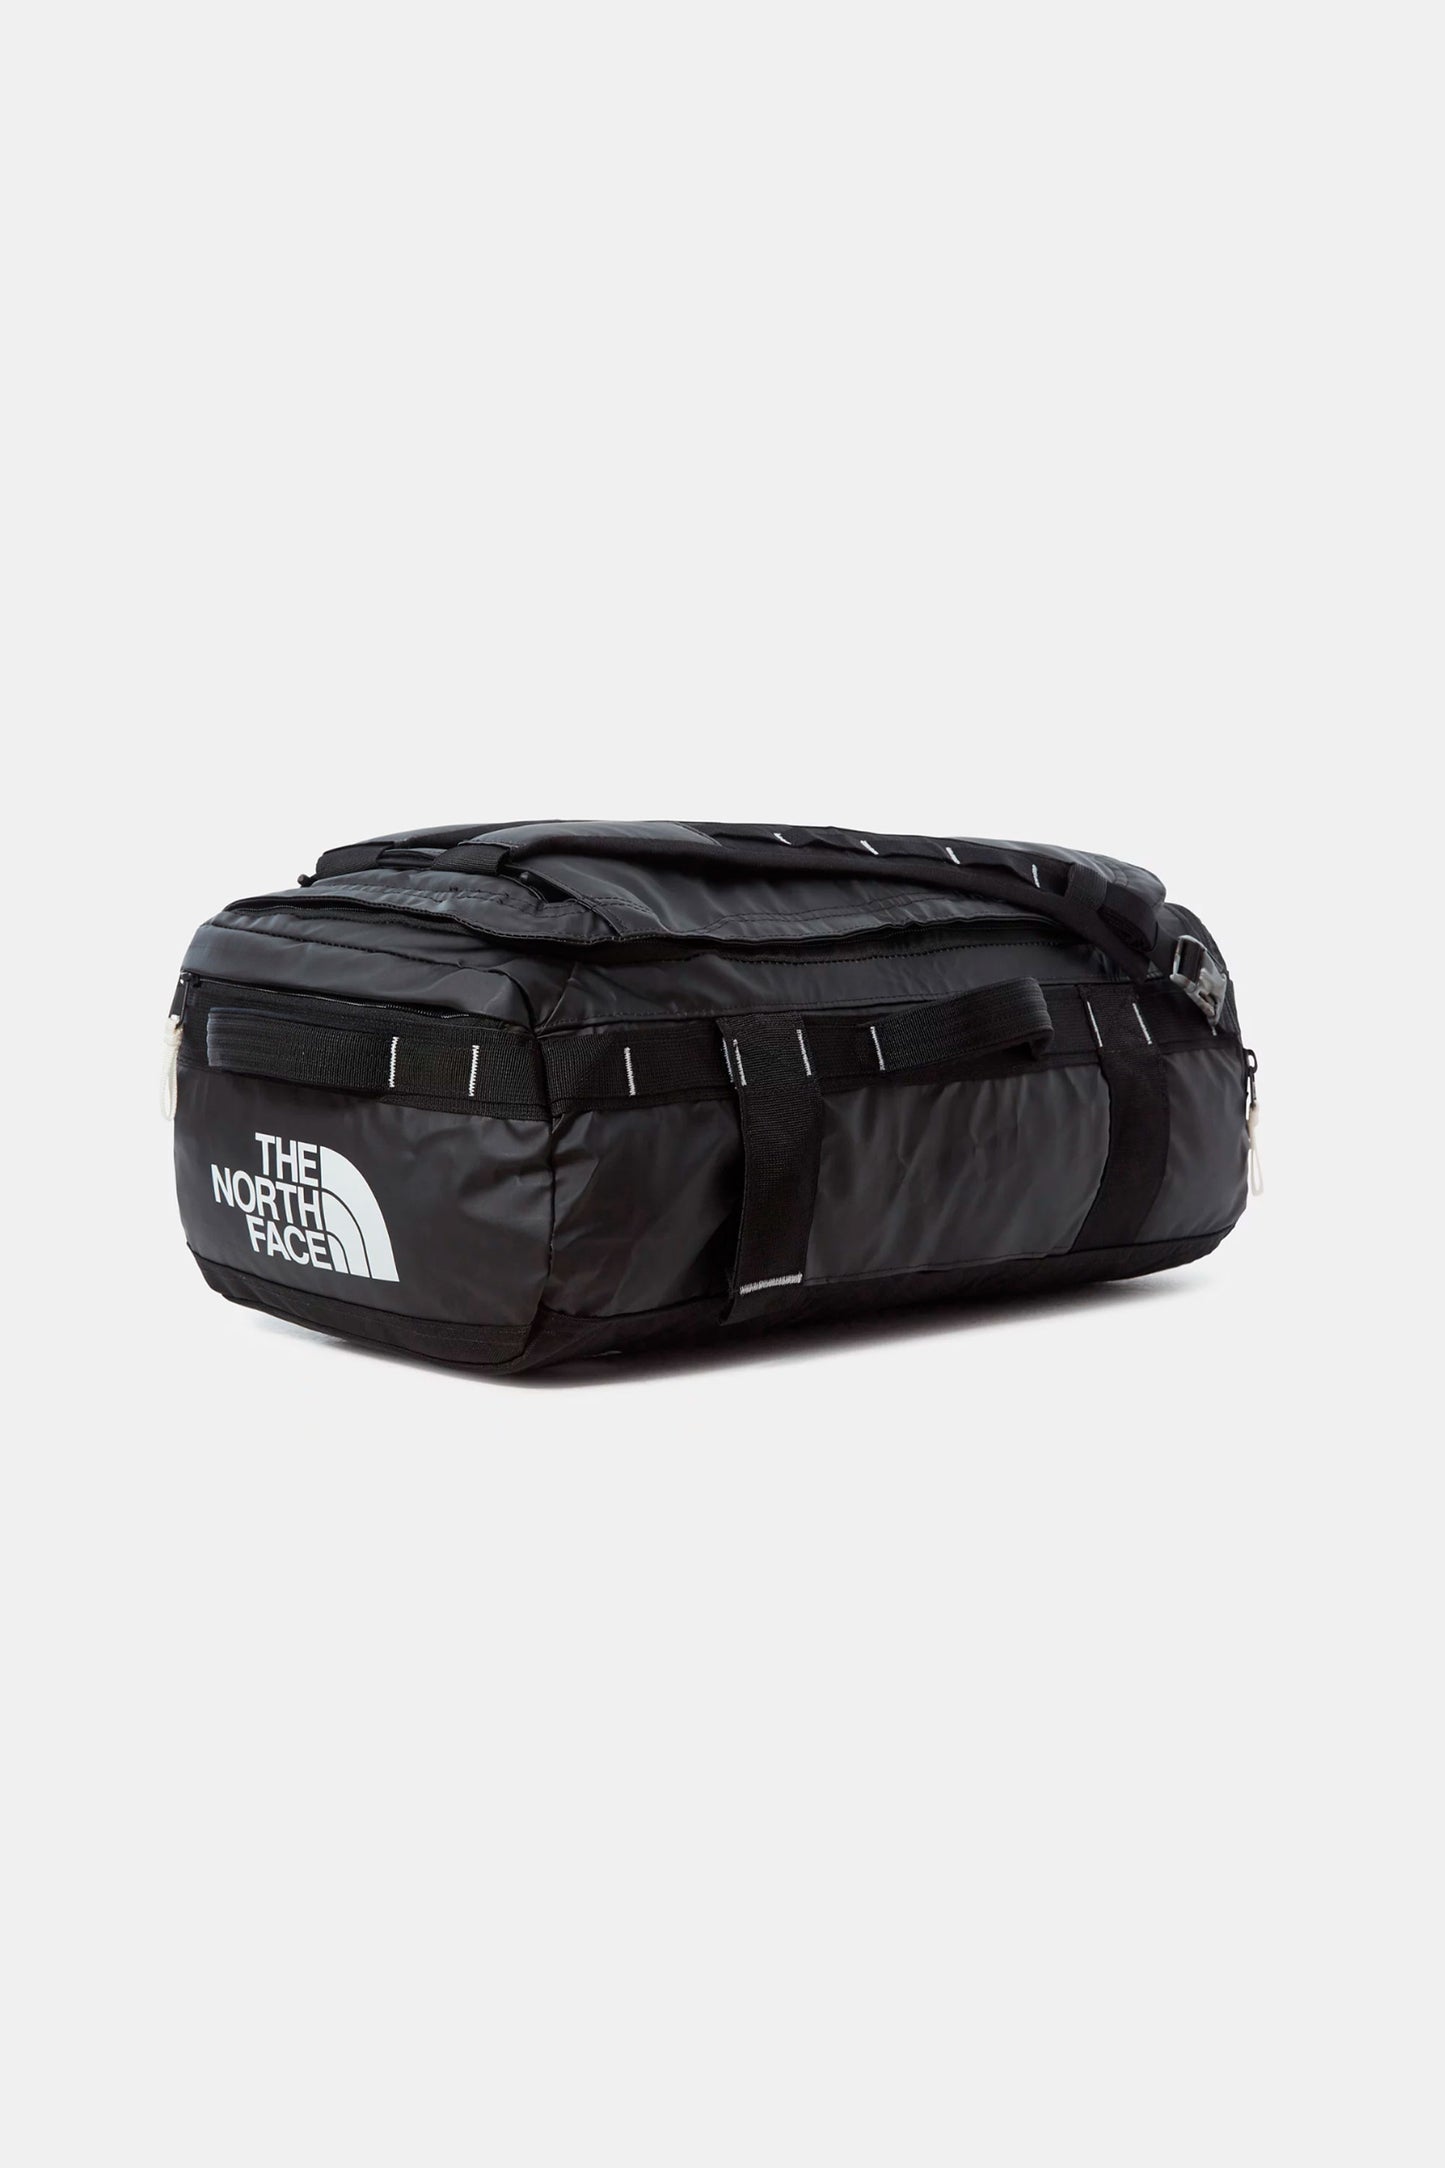 Pukas-Surf-Shop-The-North-Face-backpack-base-camp-duffel-voyager-32l-black